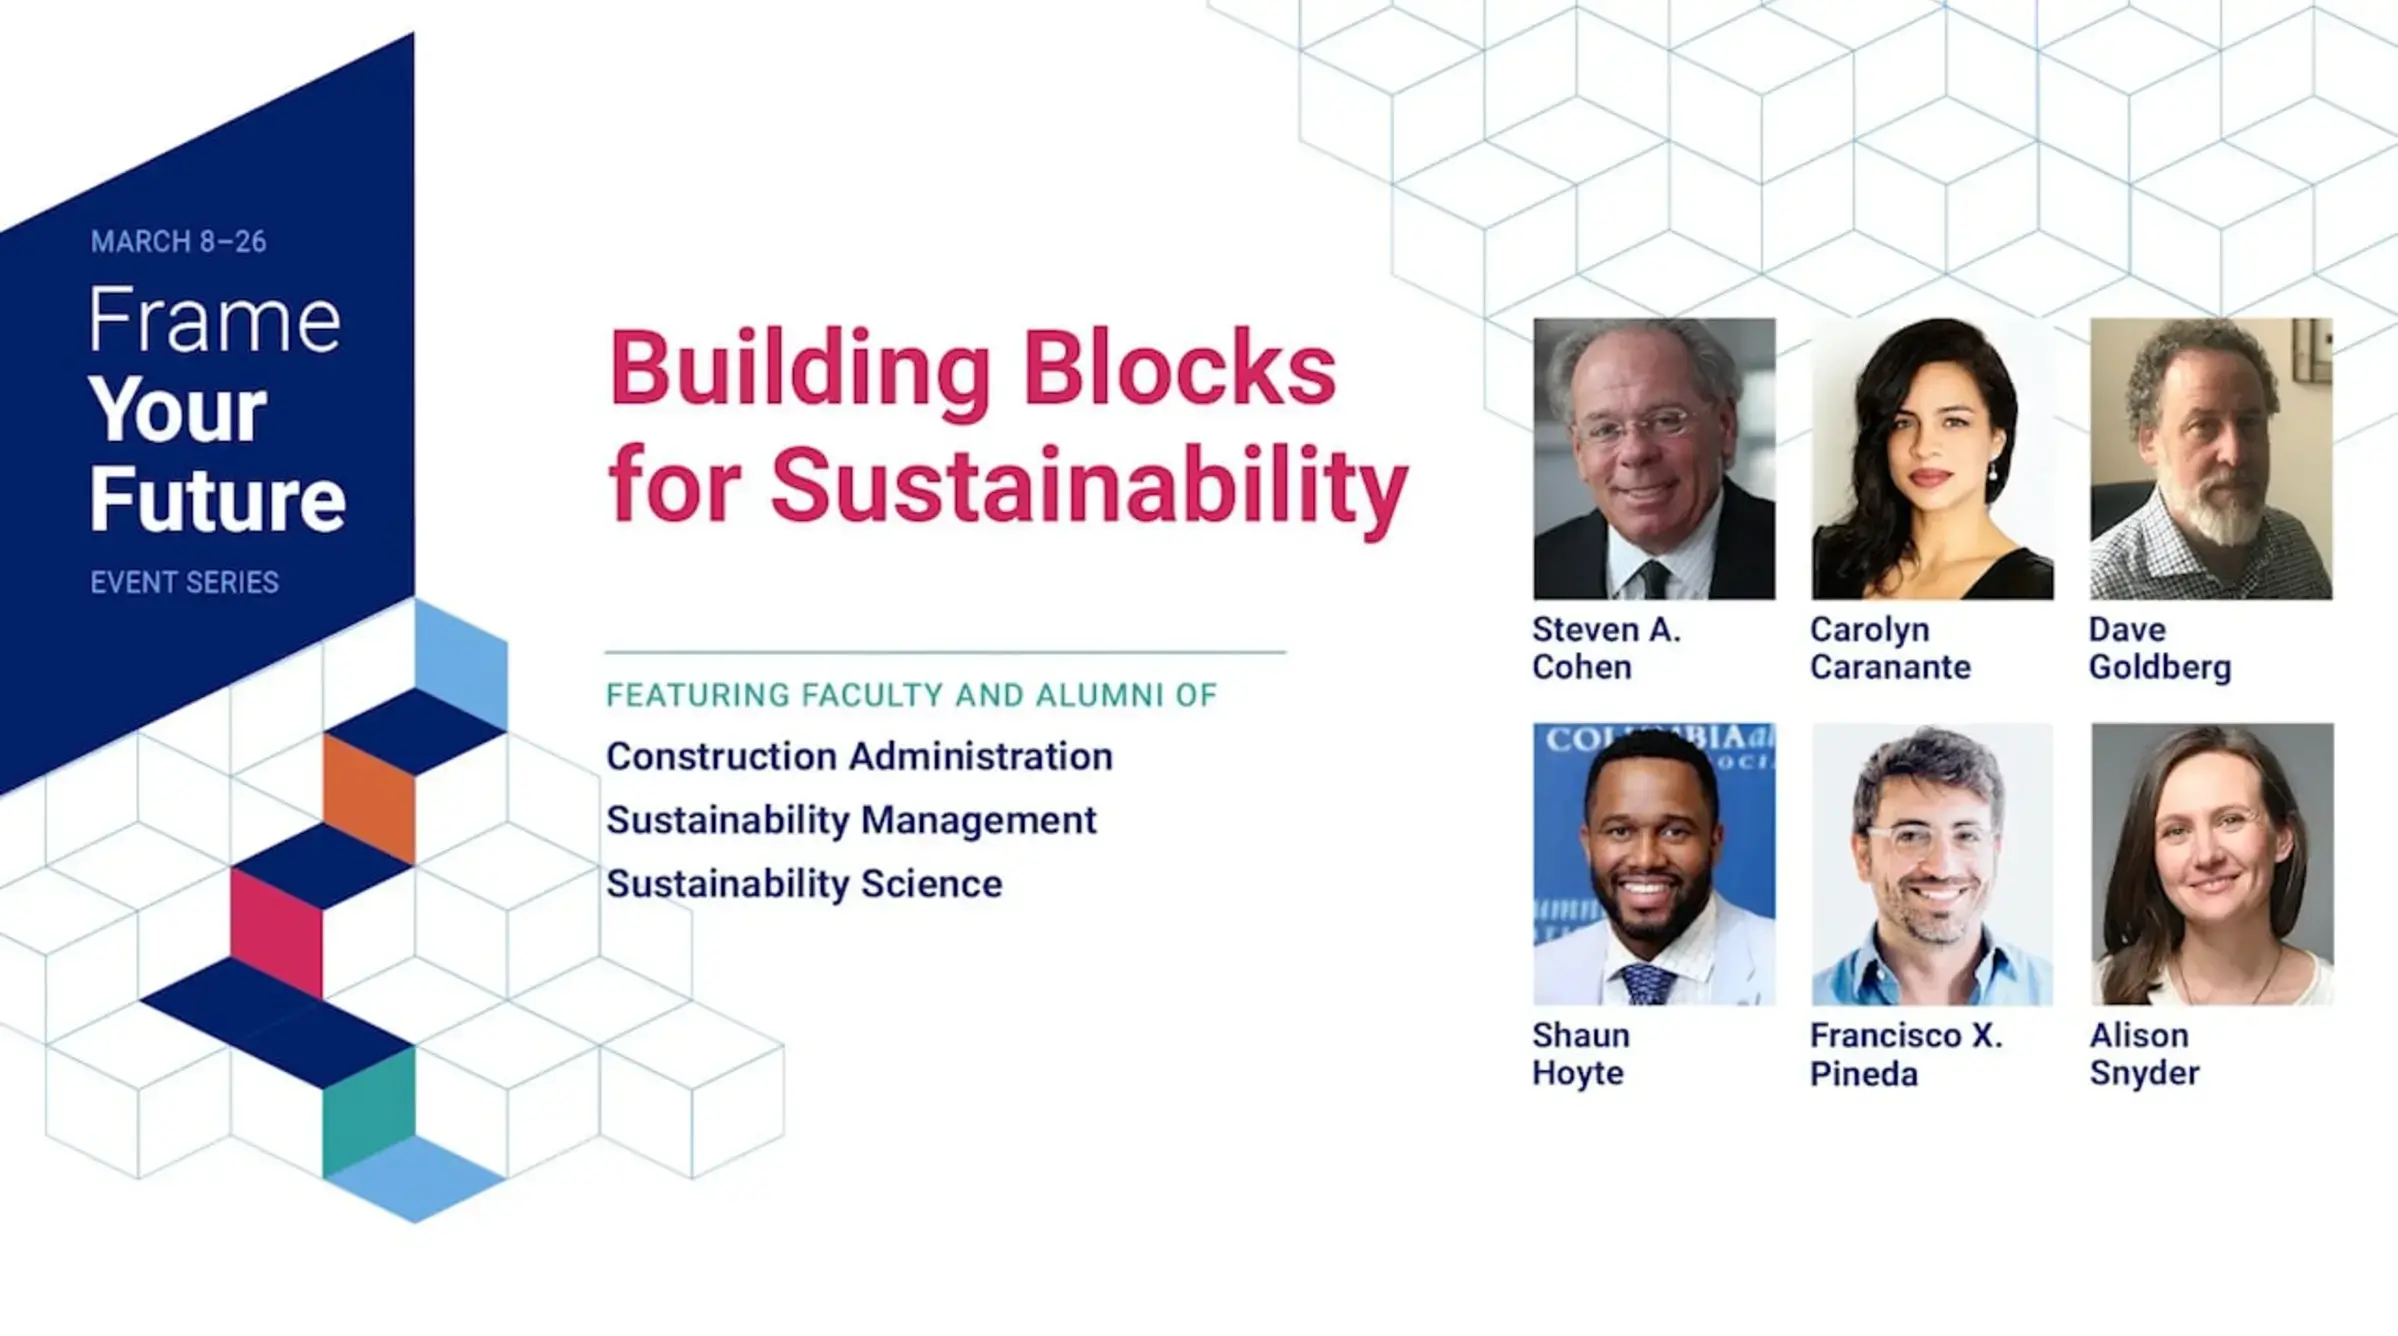 Building Blocks for Sustainability Clip - Shaun Hoyte, Program Manager for Con Edison